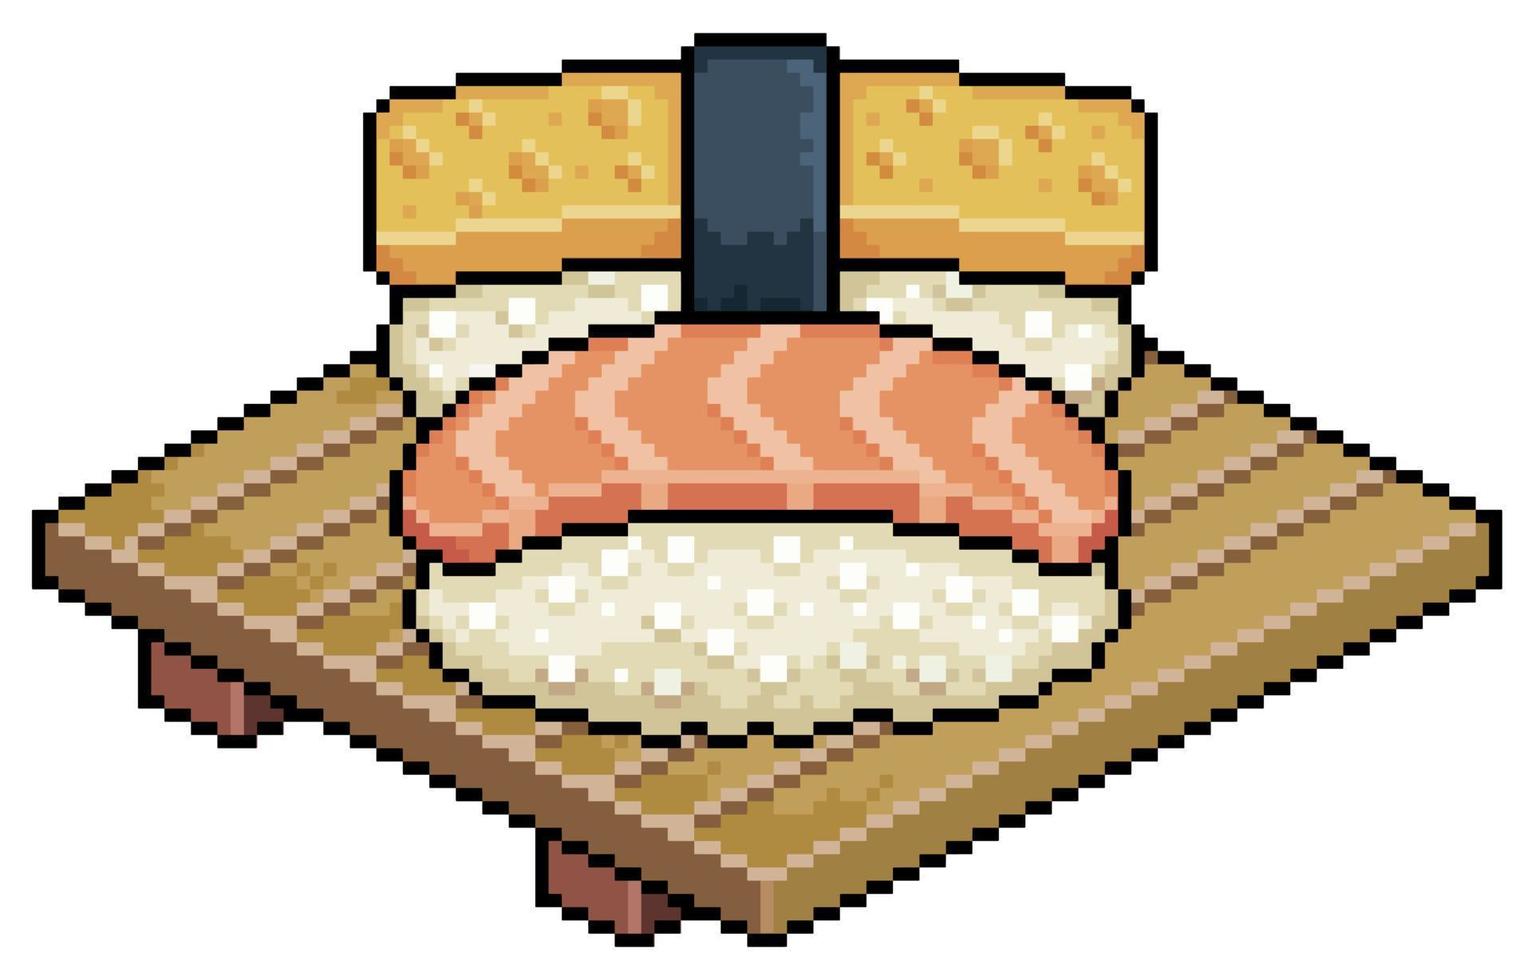 Pixel art sake nigiri and tamago on wooden sushi board vector icon for 8bit game on white background